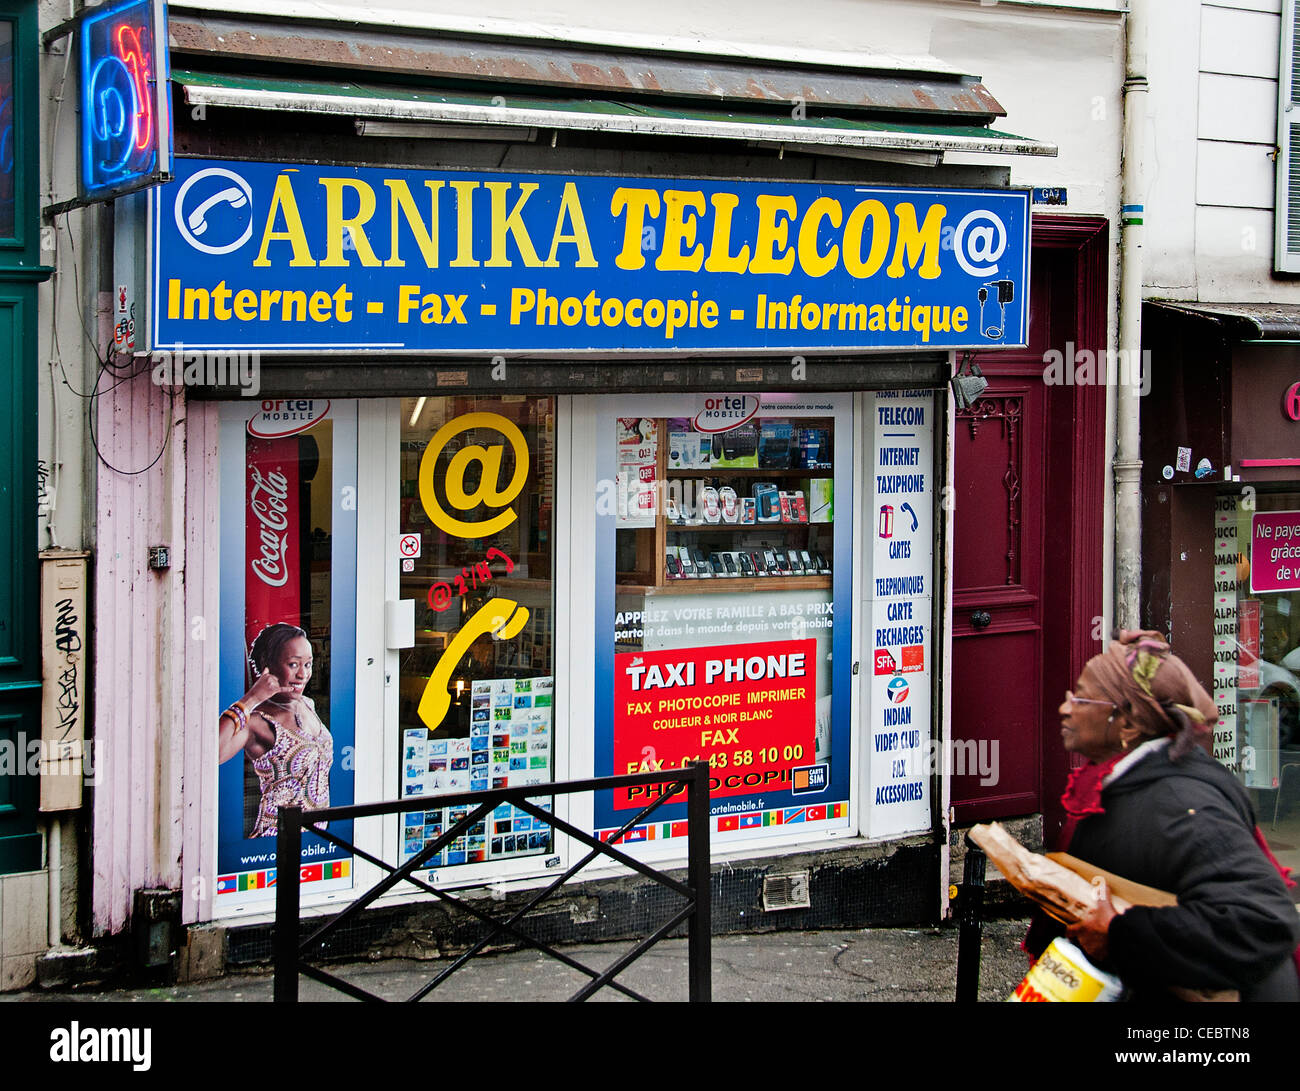 Arnika Telecom Internet Fax Photocopy - Boulevard Belleville Paris France French Stock Photo